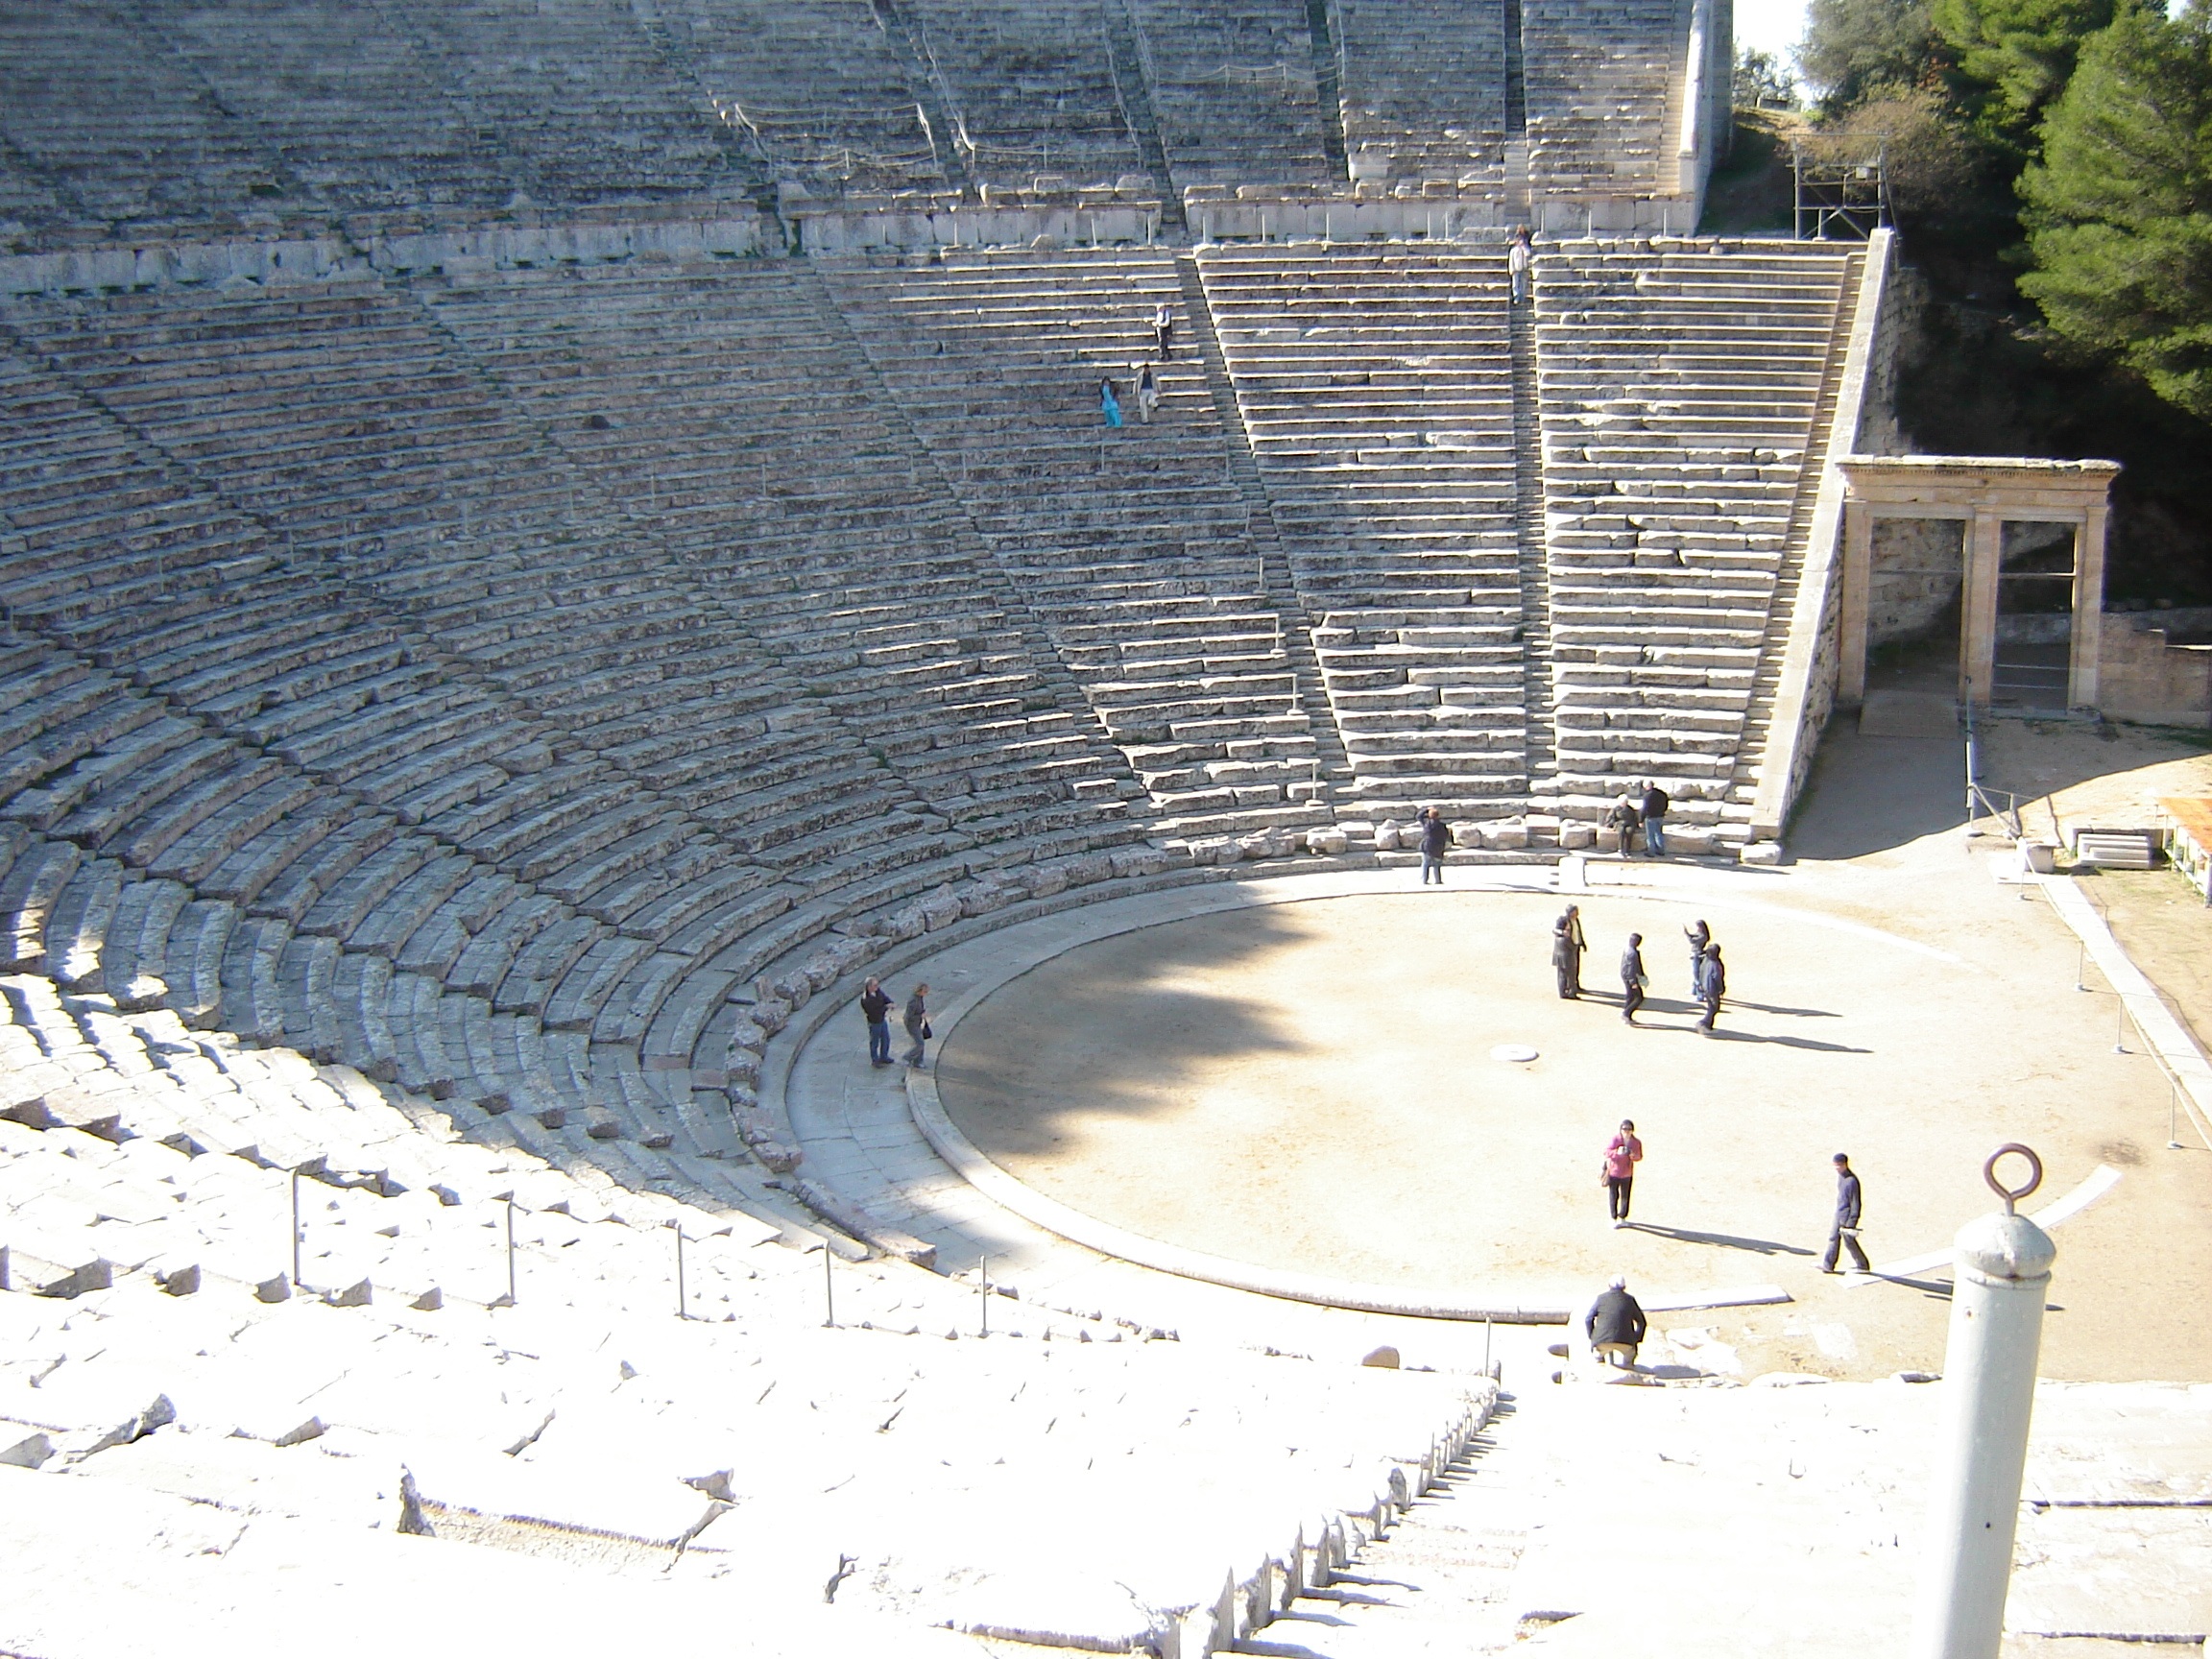 group of people stand on half-circle coliseum, epidaurus, amphitheater